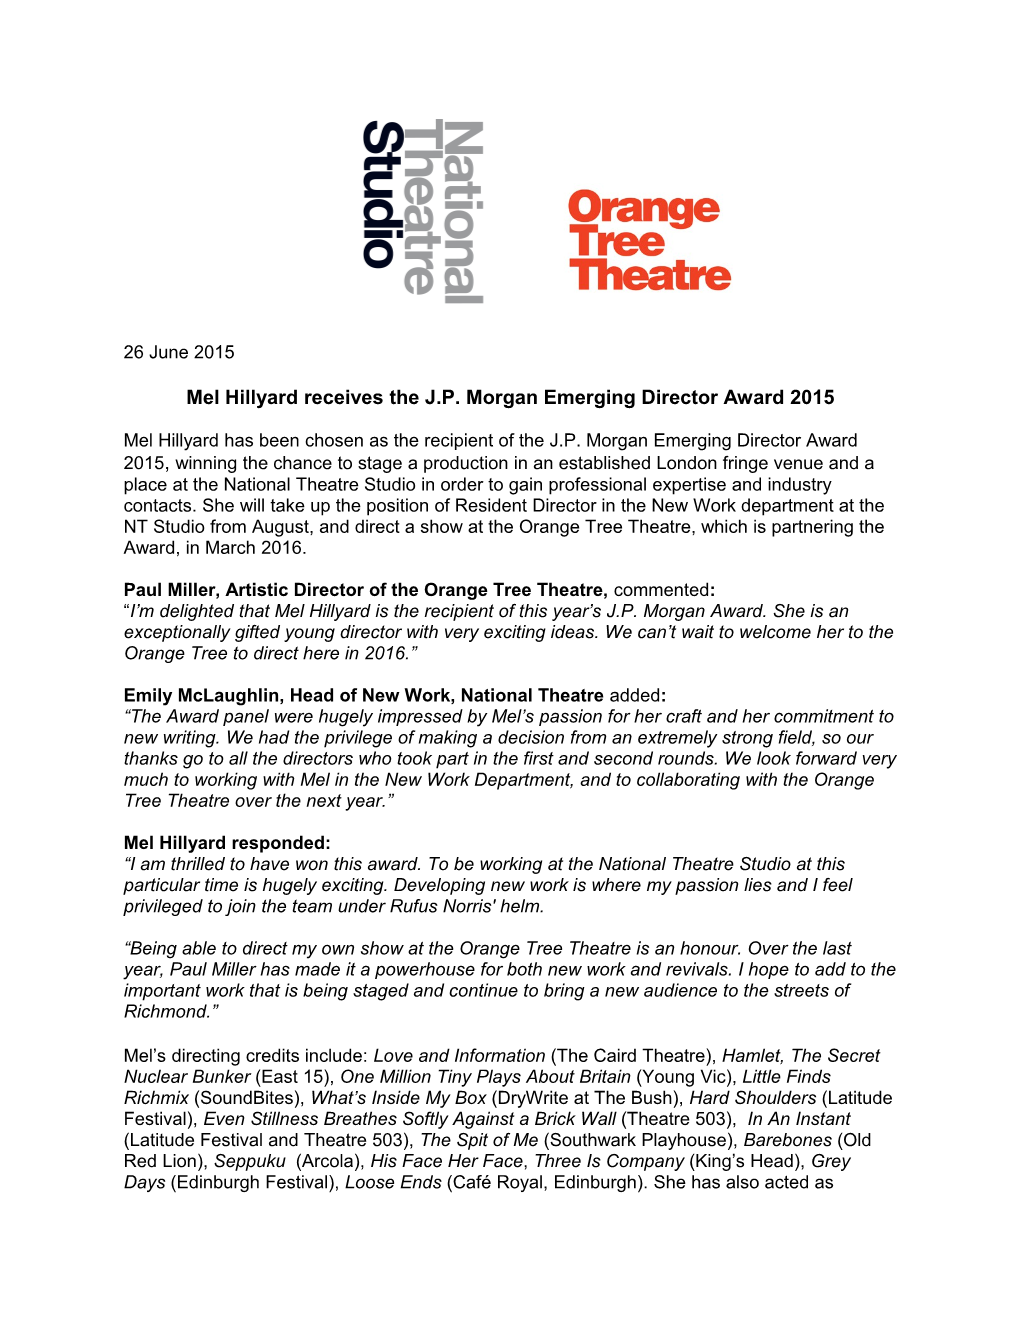 Mel Hillyard Receives the J.P. Morgan Emerging Director Award 2015